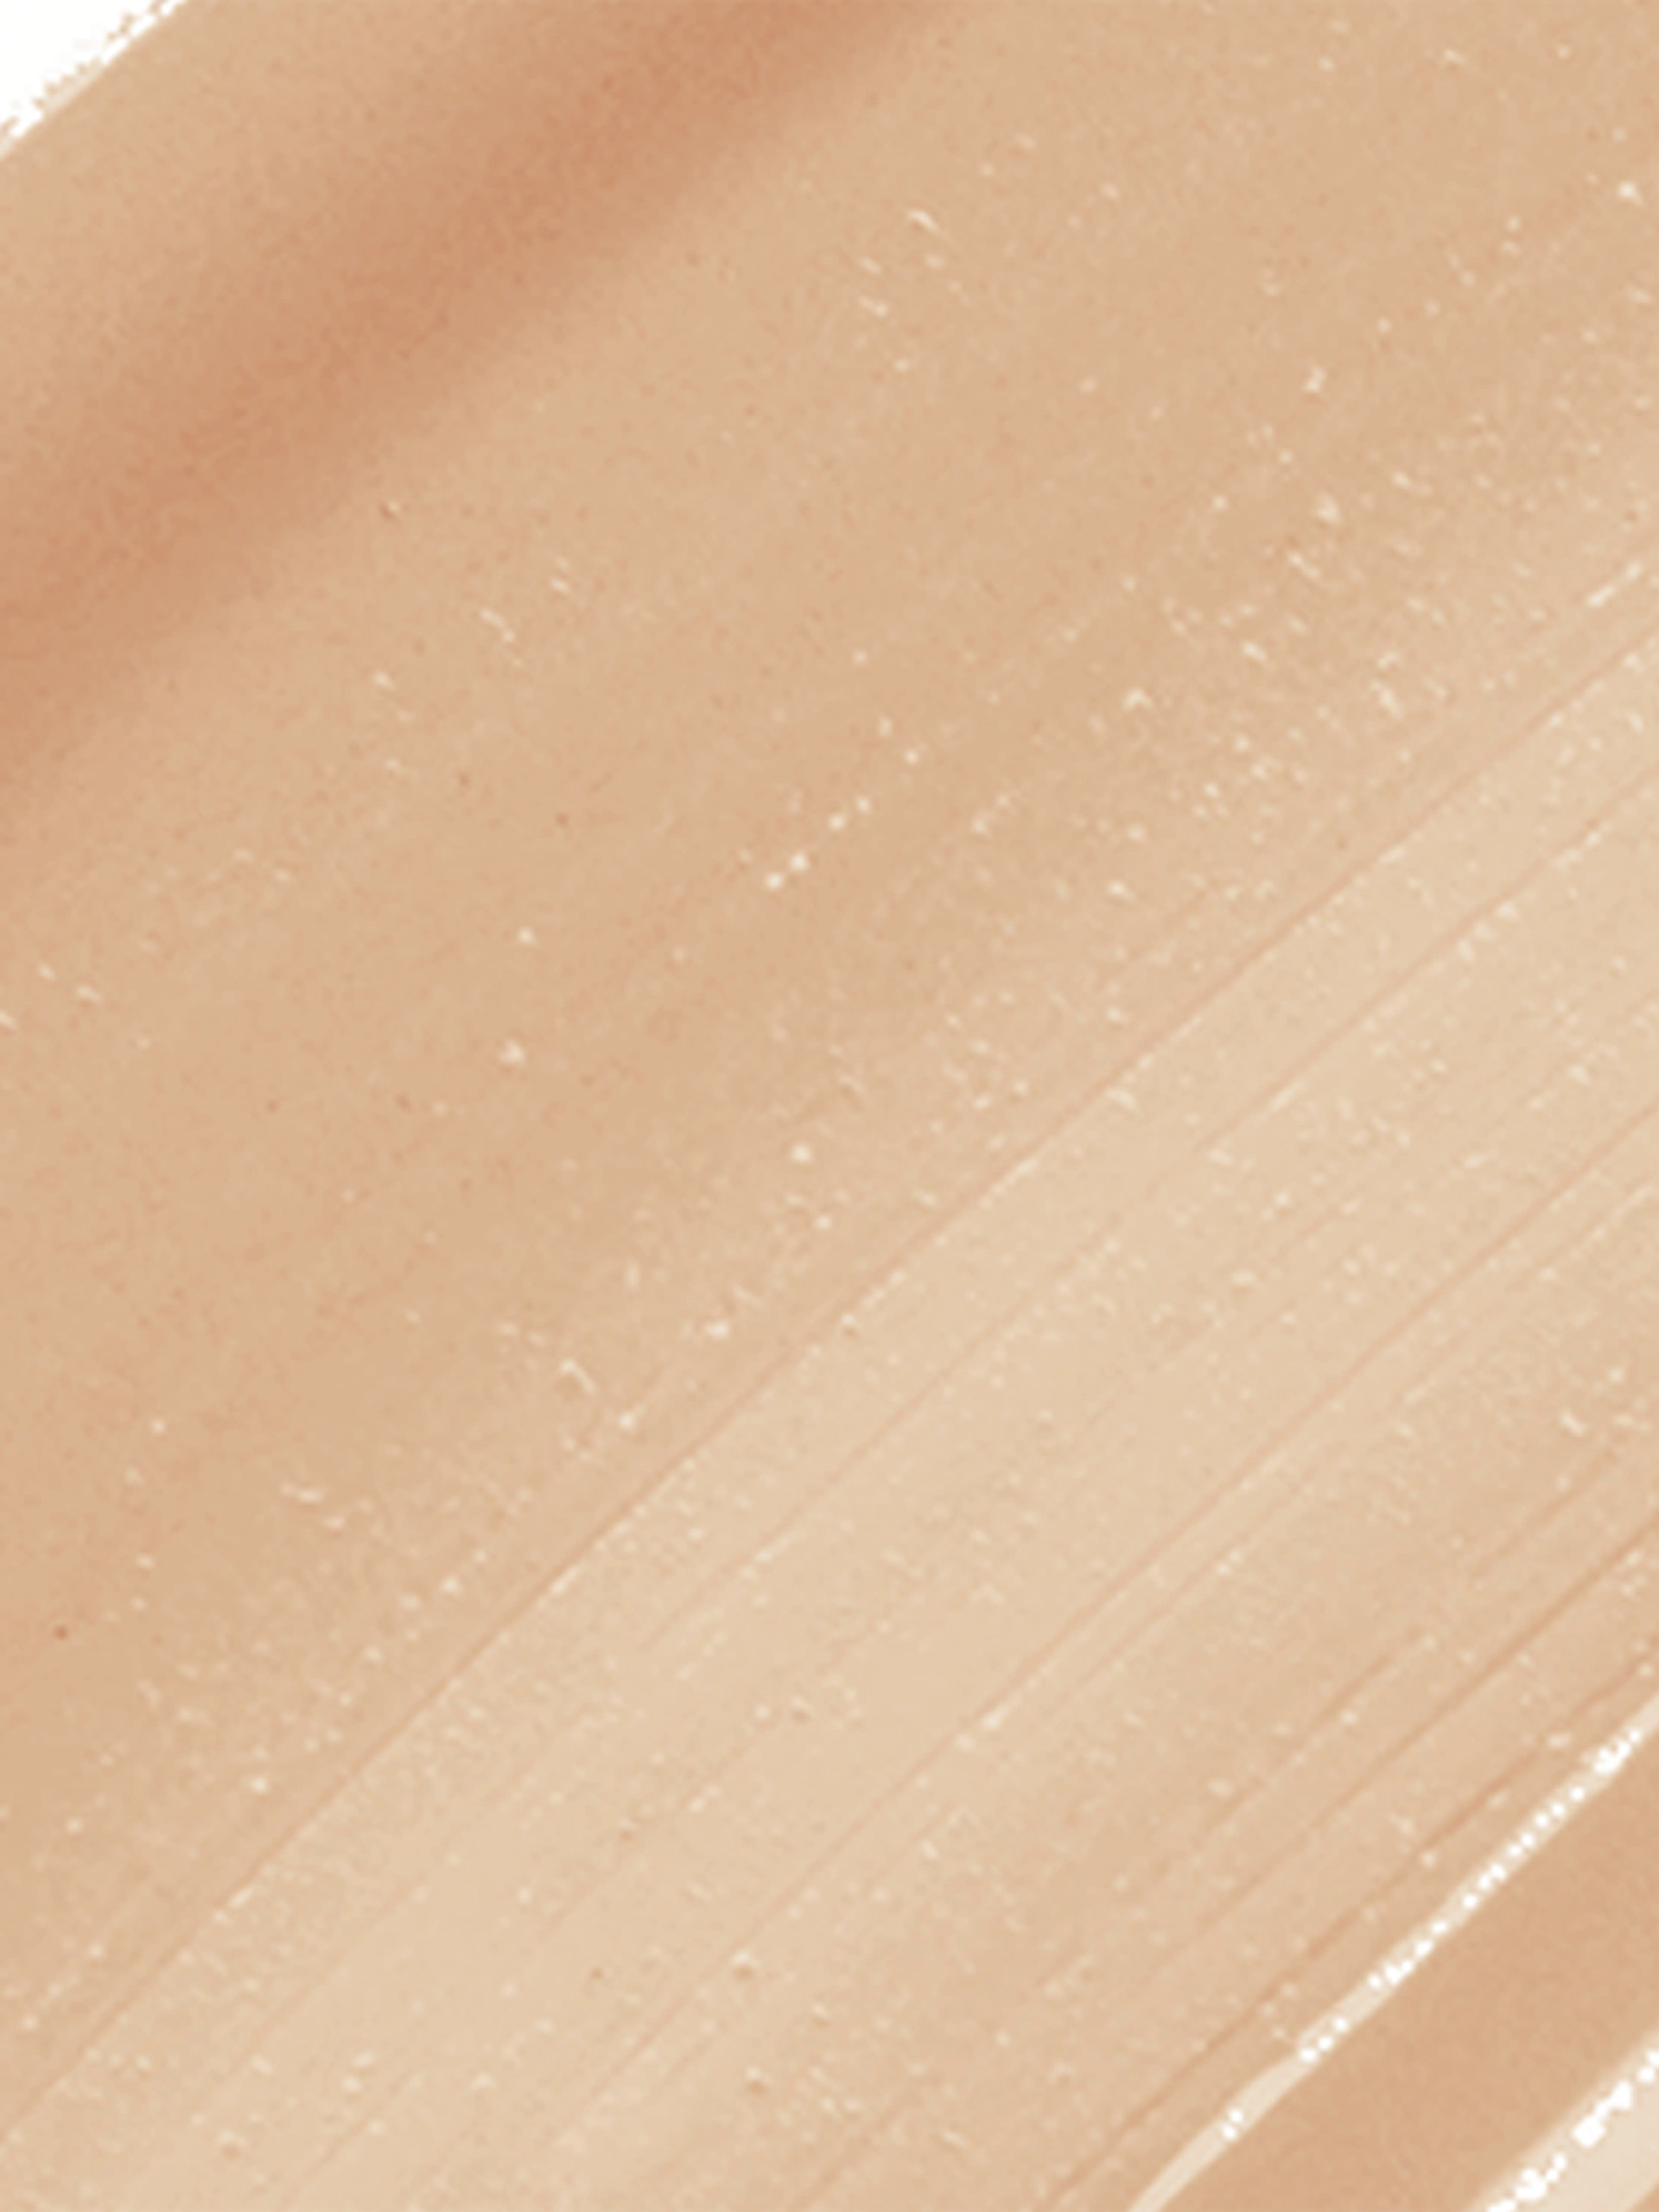 L'Oréal Paris True Match Nude színezett szérum /4-5 - 1 db-3